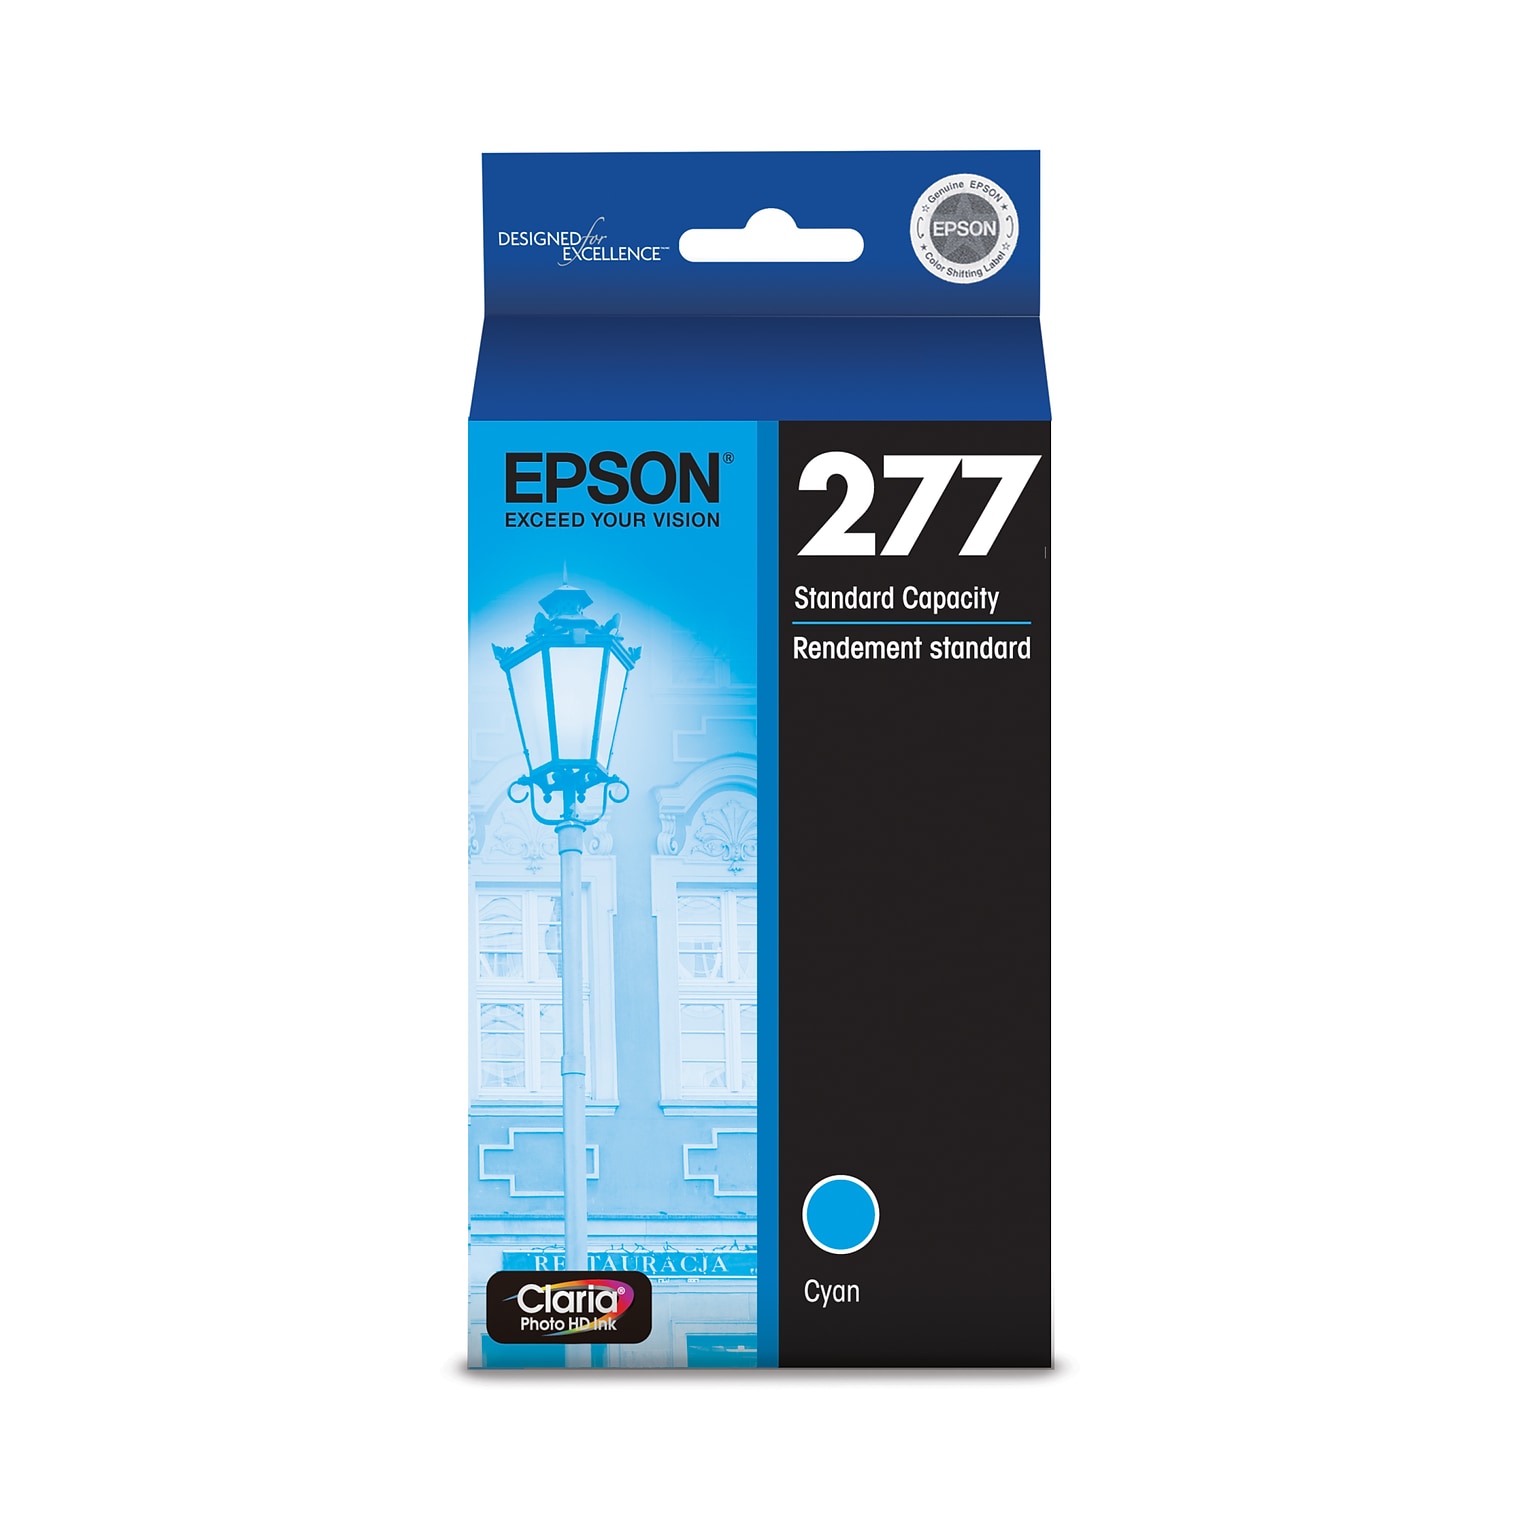 Epson 277 Cyan Standard Yield Ink Cartridge